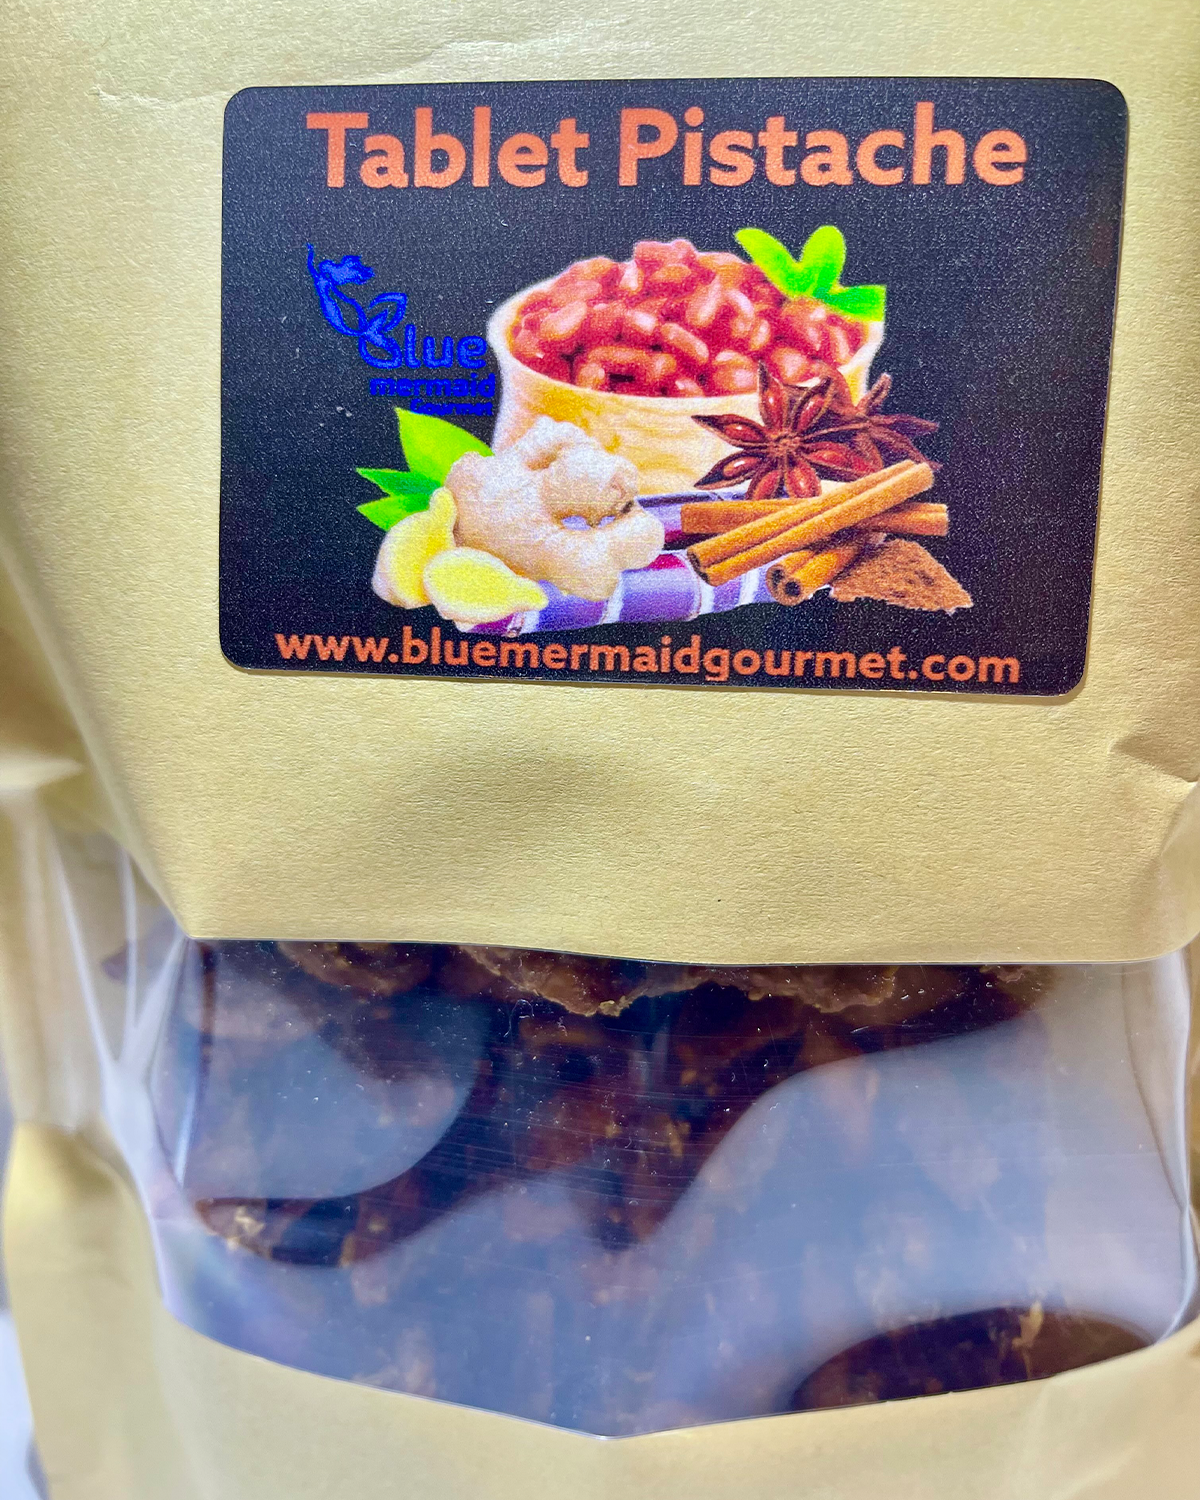 All Natural Peanut Brittle/ Tablet Pistache